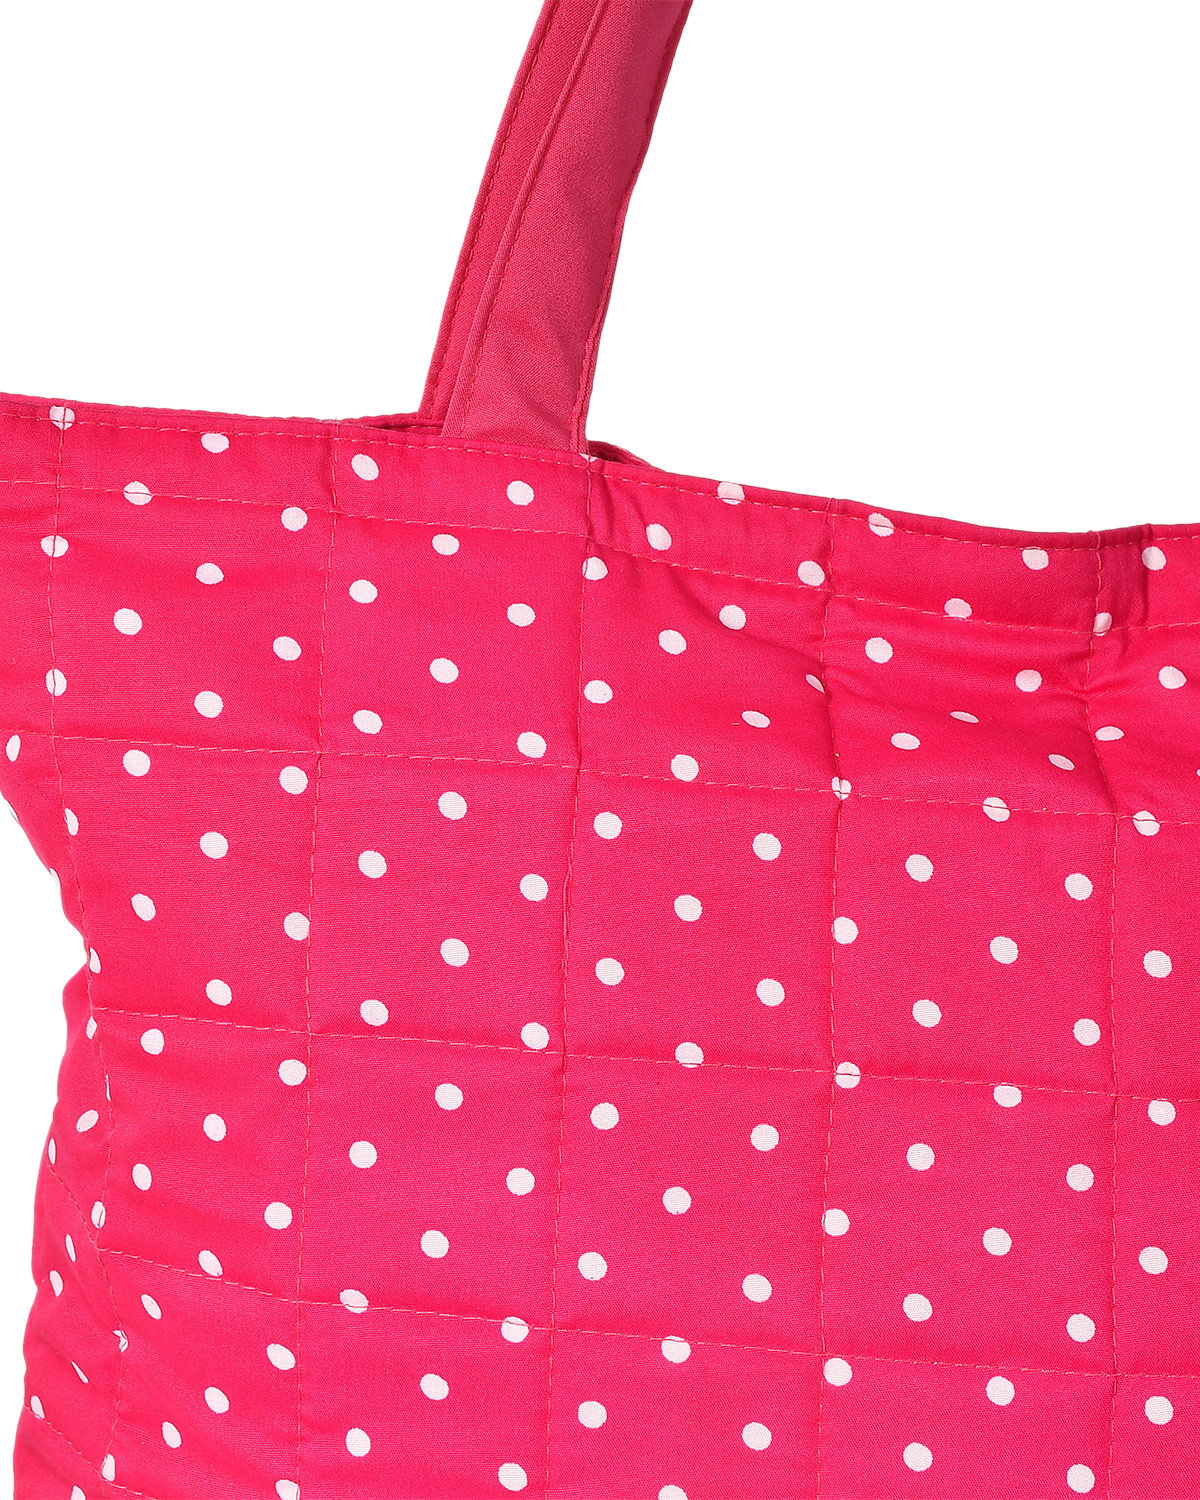 Kuber Industries Multipurposes Dot Printed Cotton Shoulder Bag/Tote Bag/Handbag/Lunch Bag With Carrying Handle (Pink)